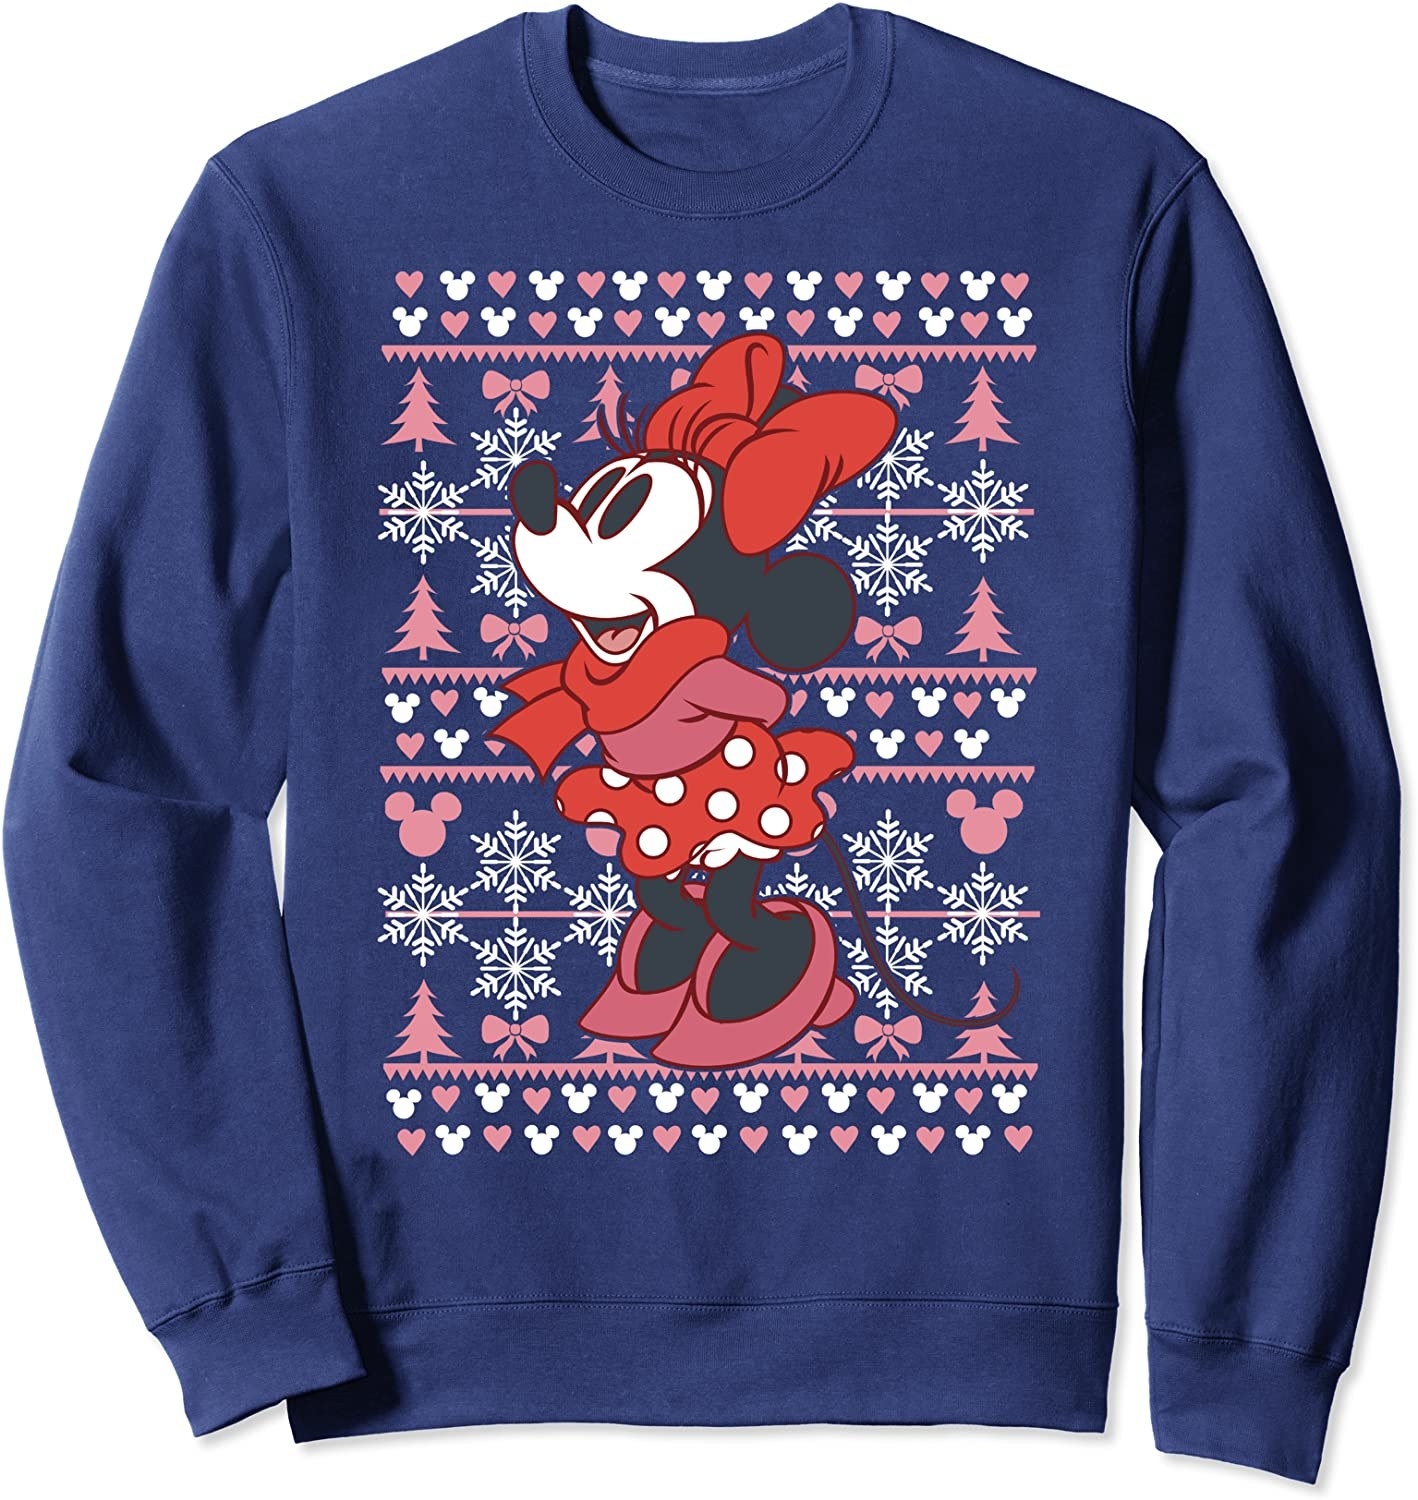 Minnie-themed Christmas sweatshirt